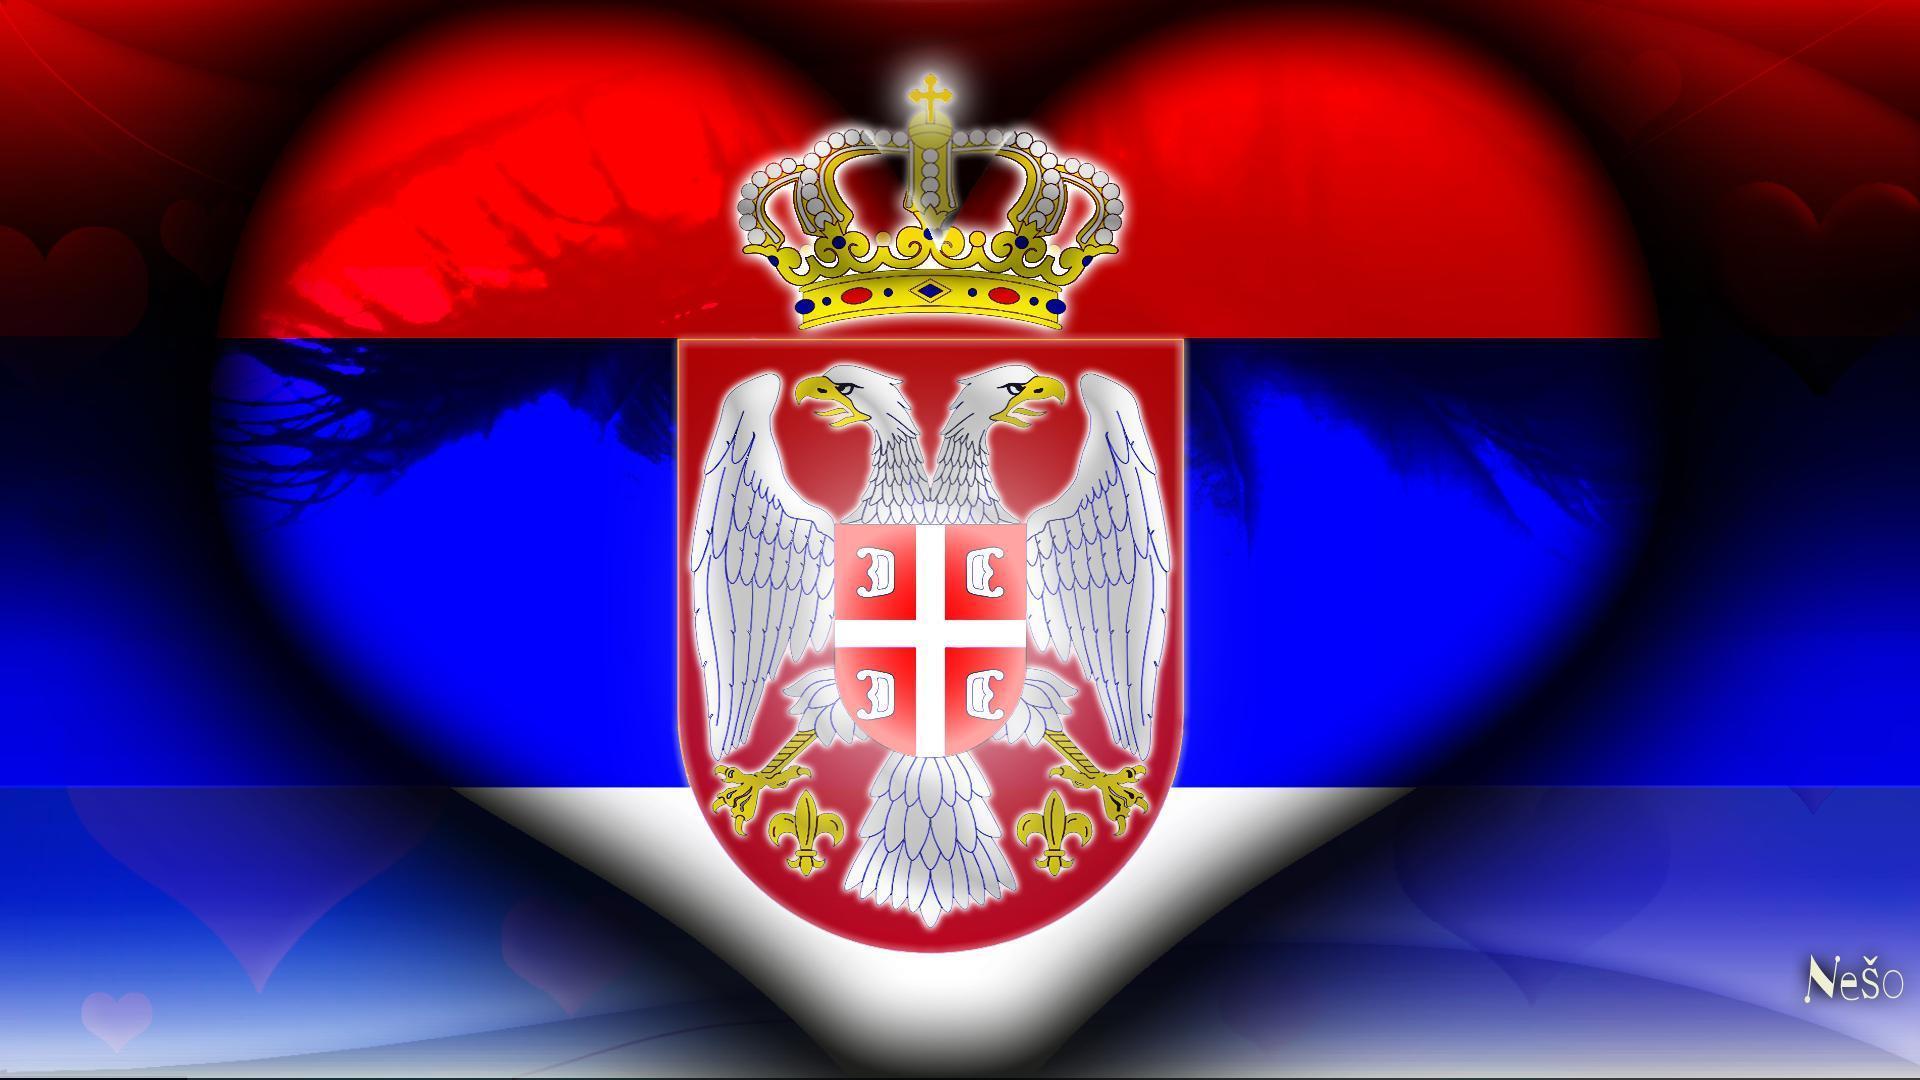 We love Serbia image